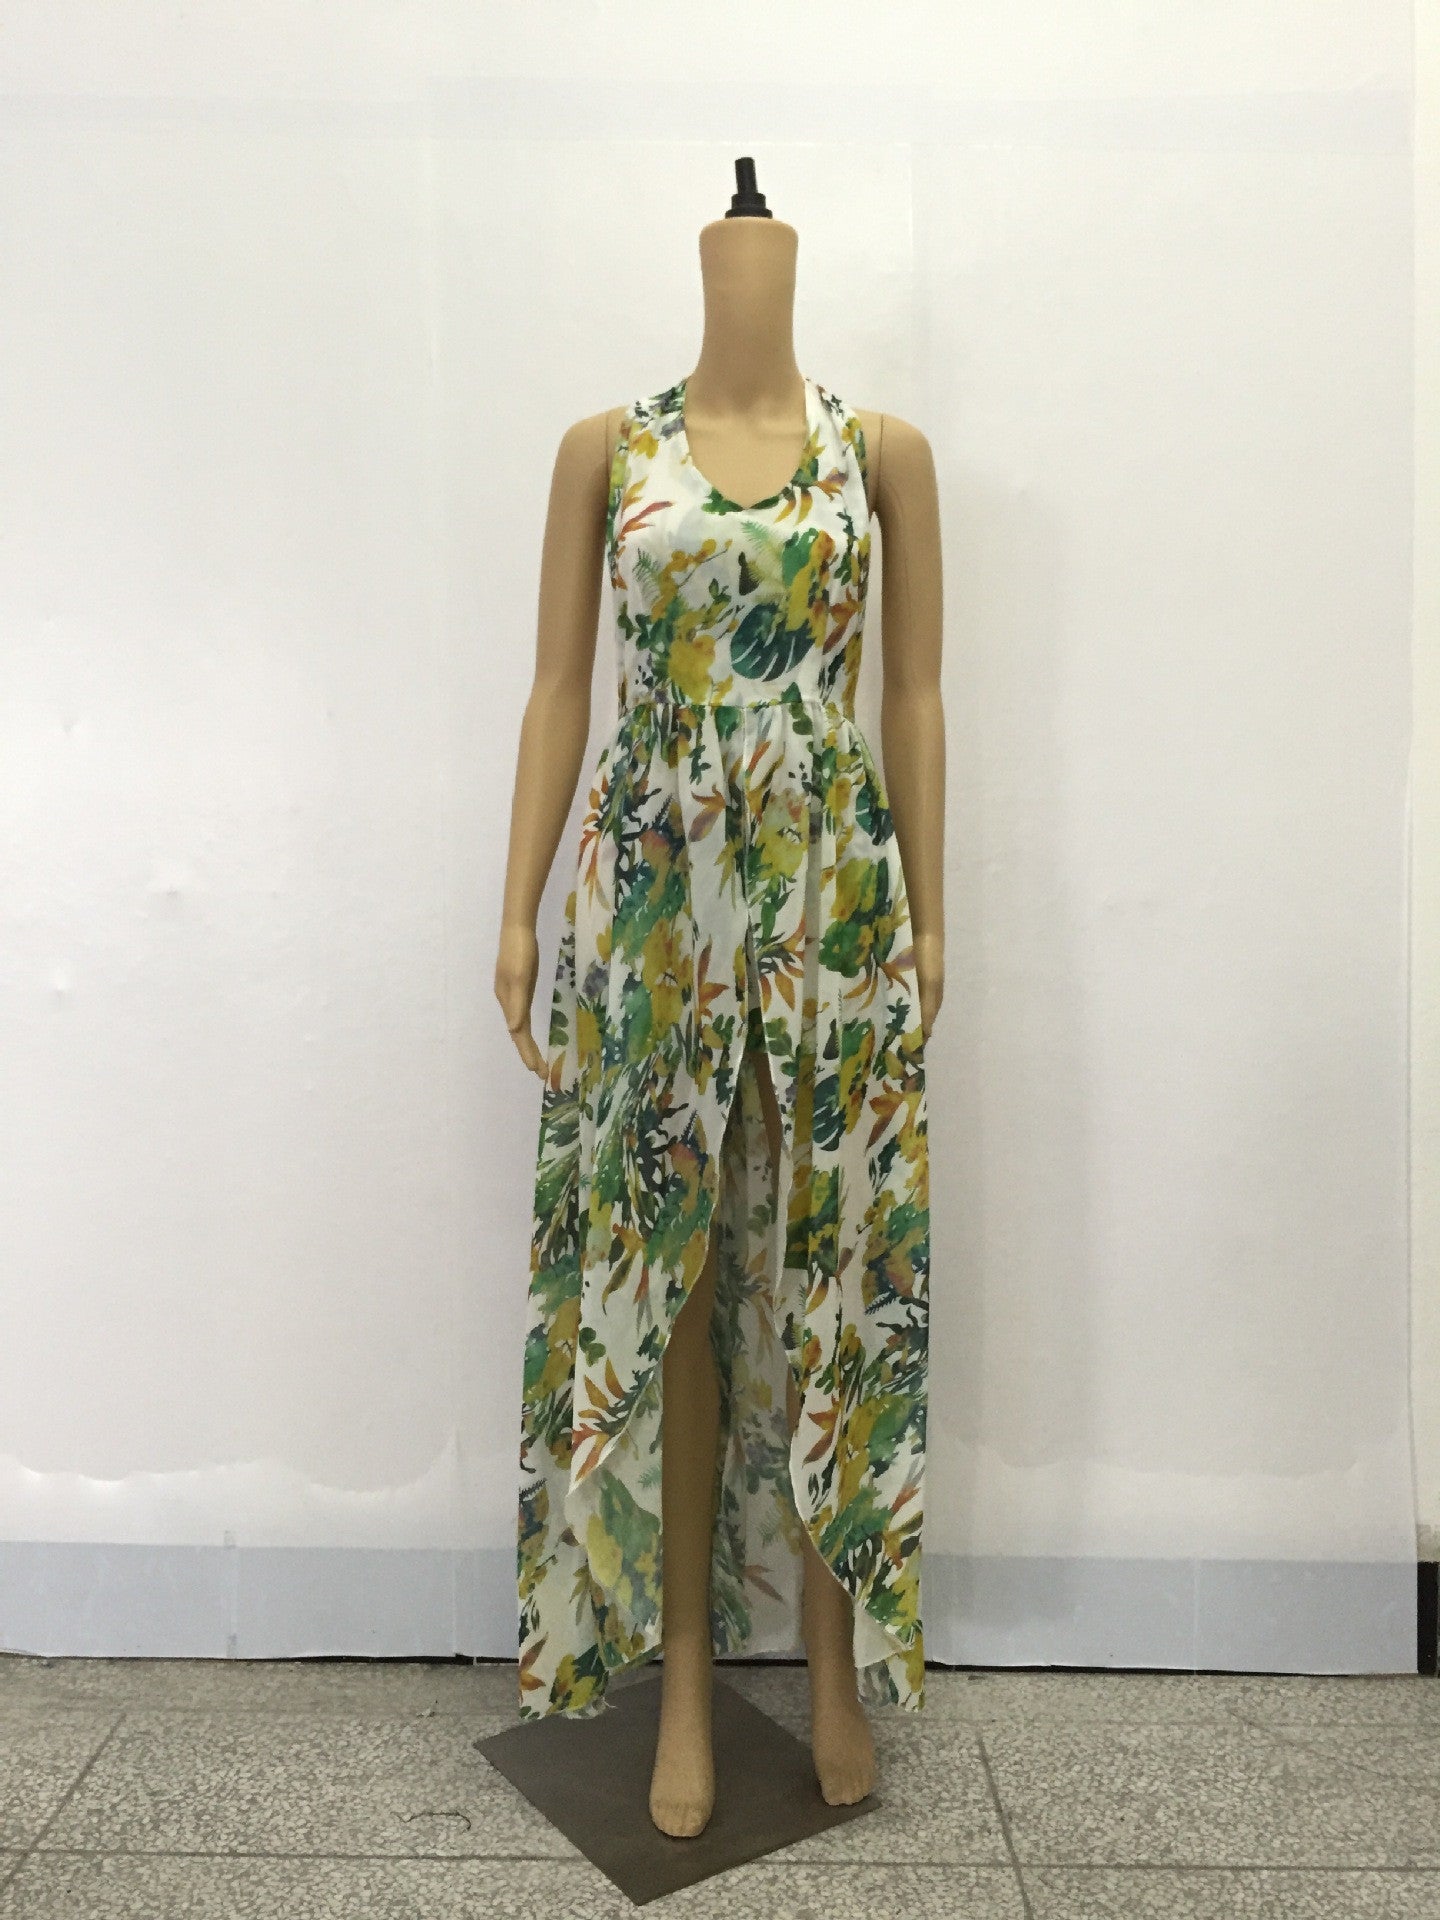 Beautiful Chiffon Floral Print Halter Split Beach Long Dress - Oh Yours Fashion - 5